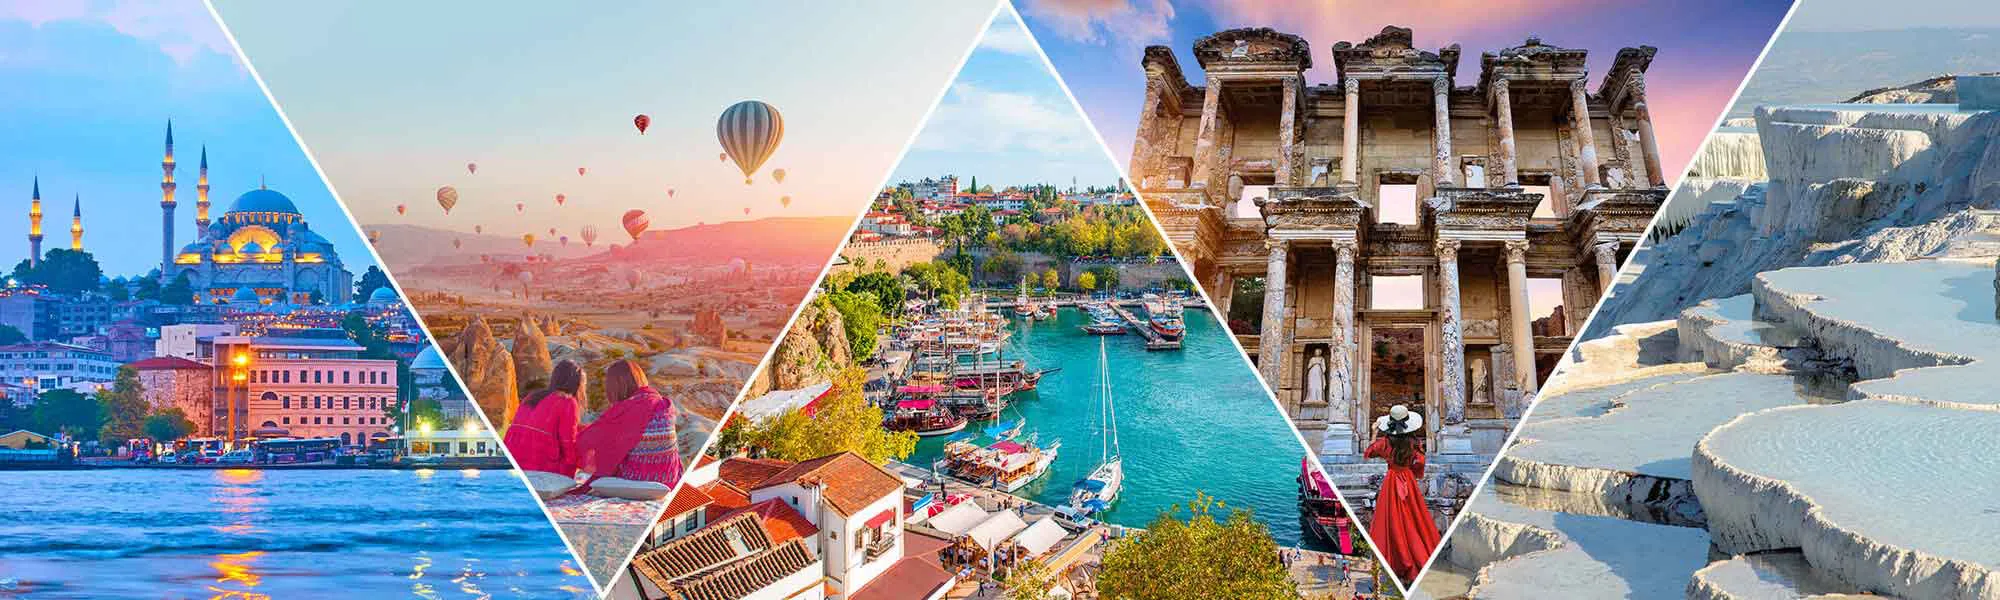 Custom made 5 Nights 6 days Turkey Tour from Istanbul - Antalya- Cappadocia